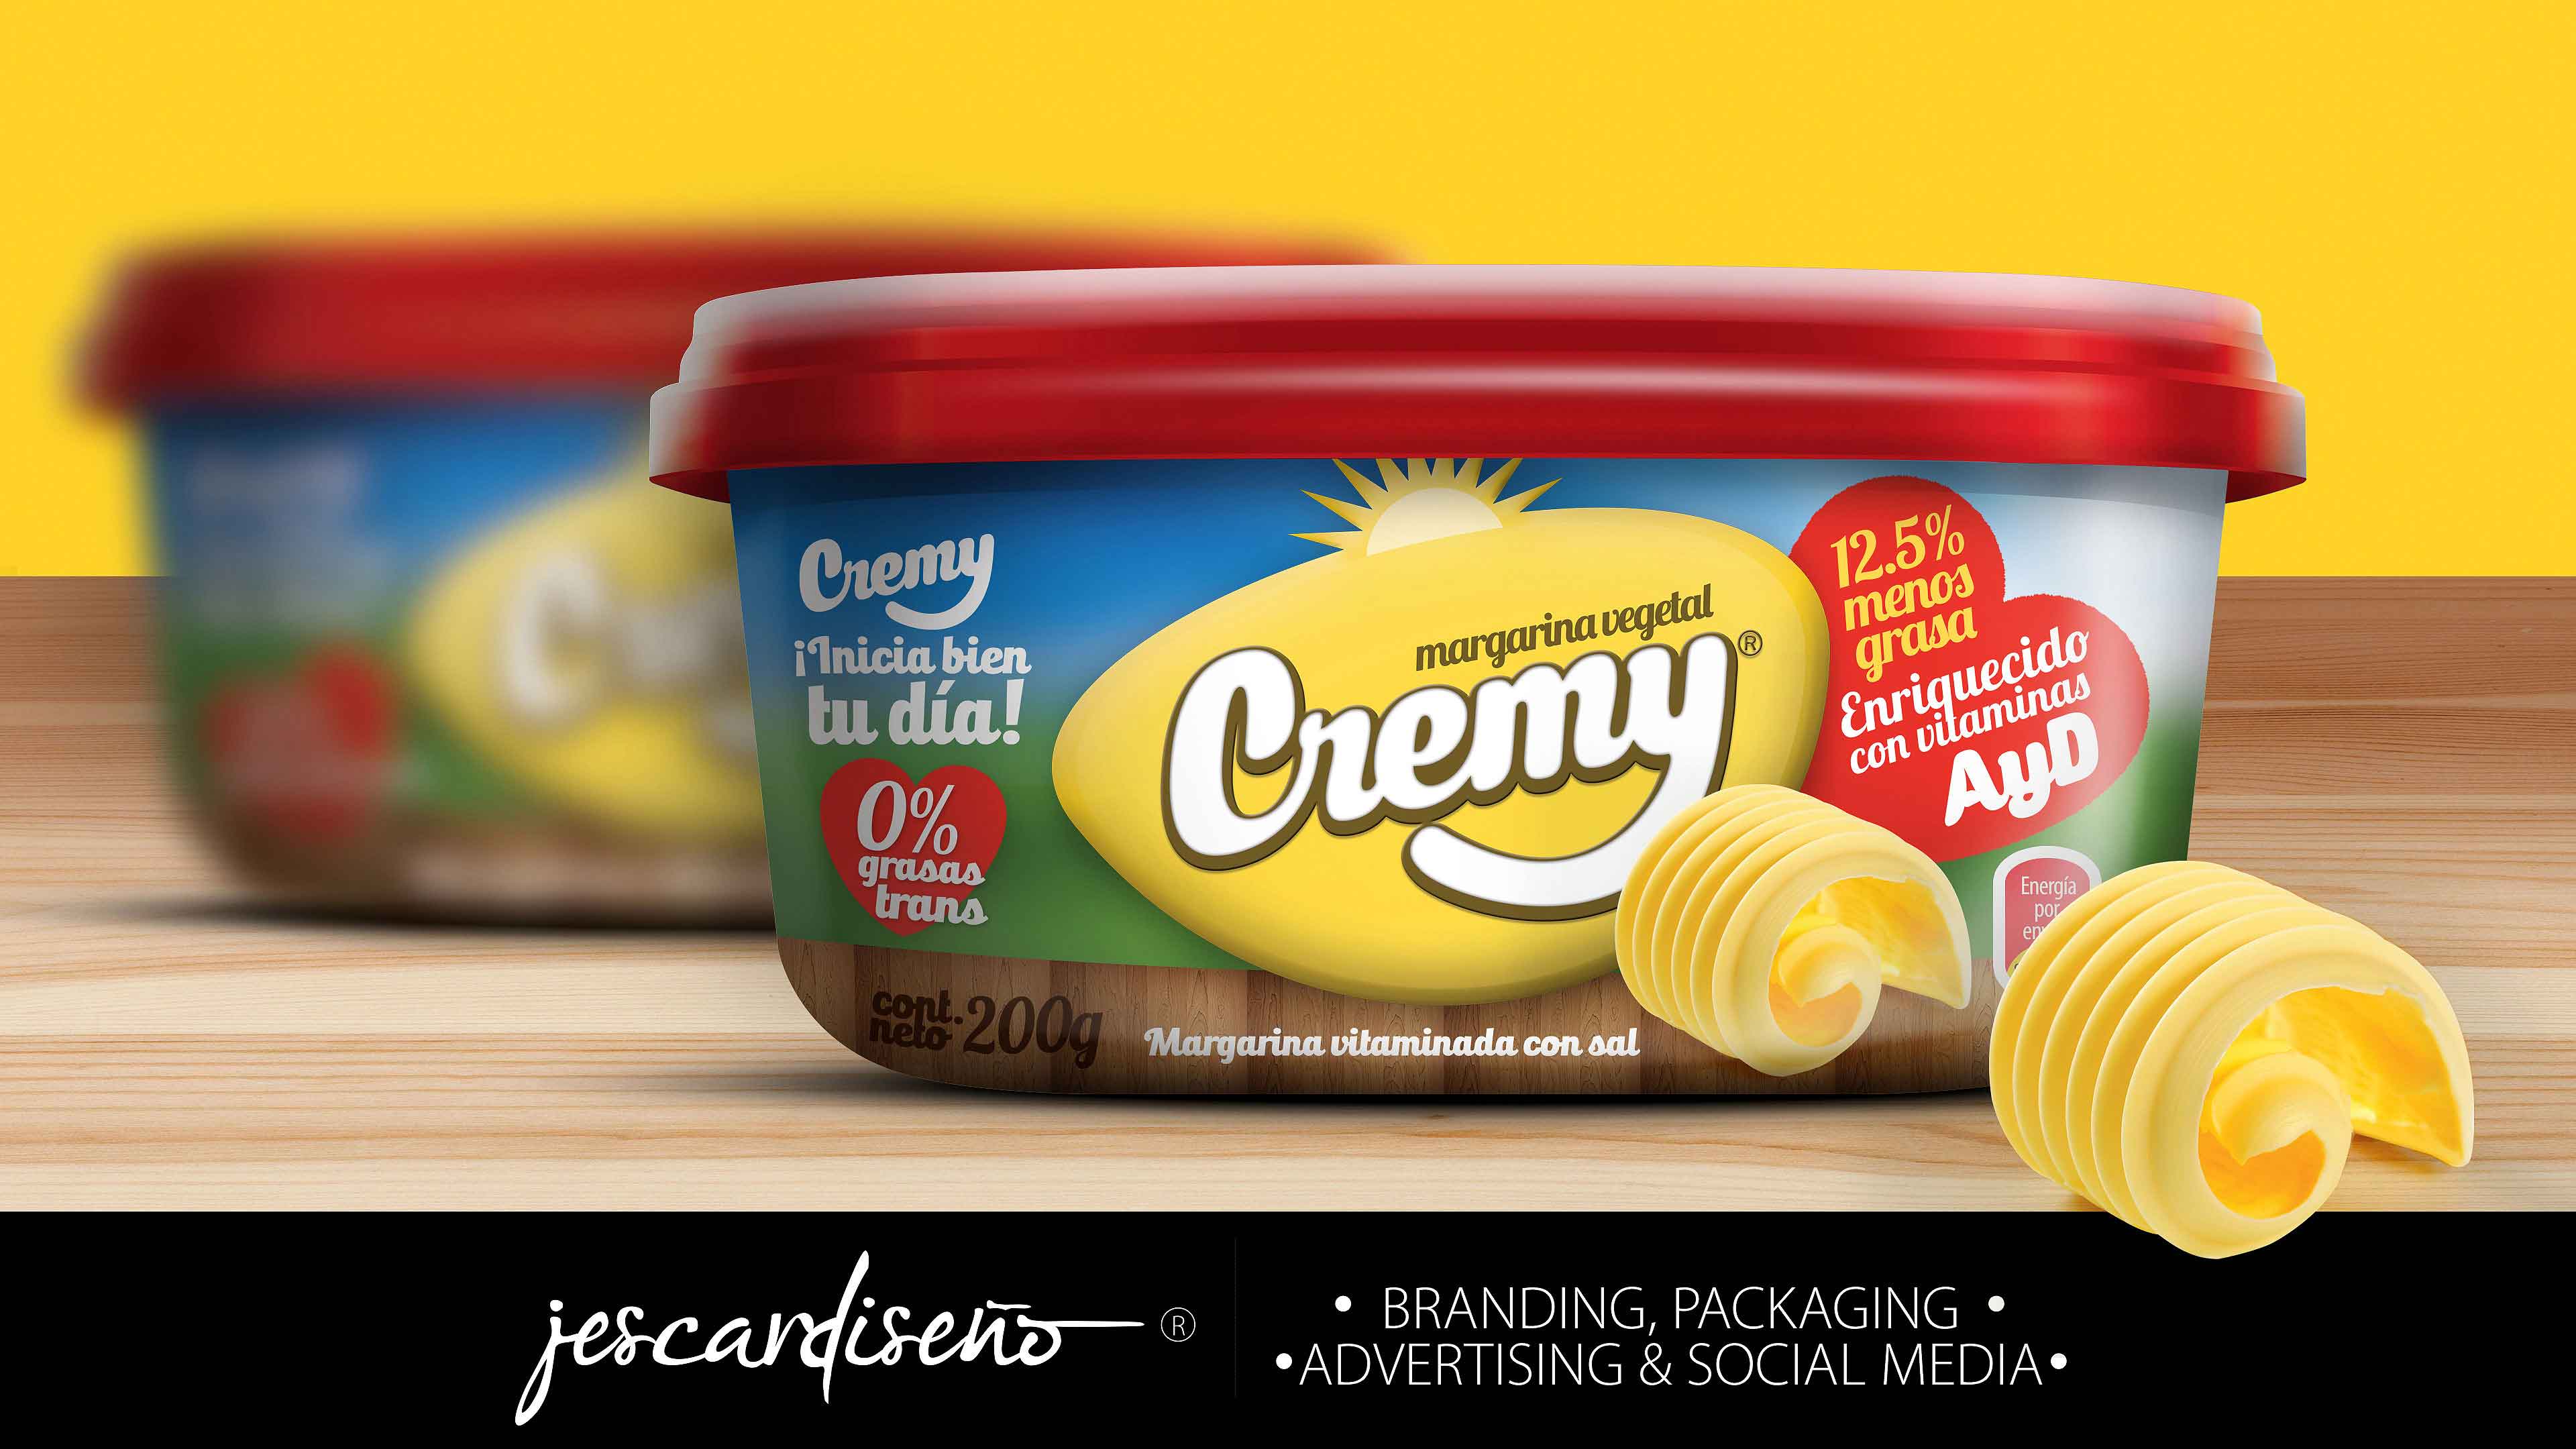 cremy packaging branding jescardiseno v3